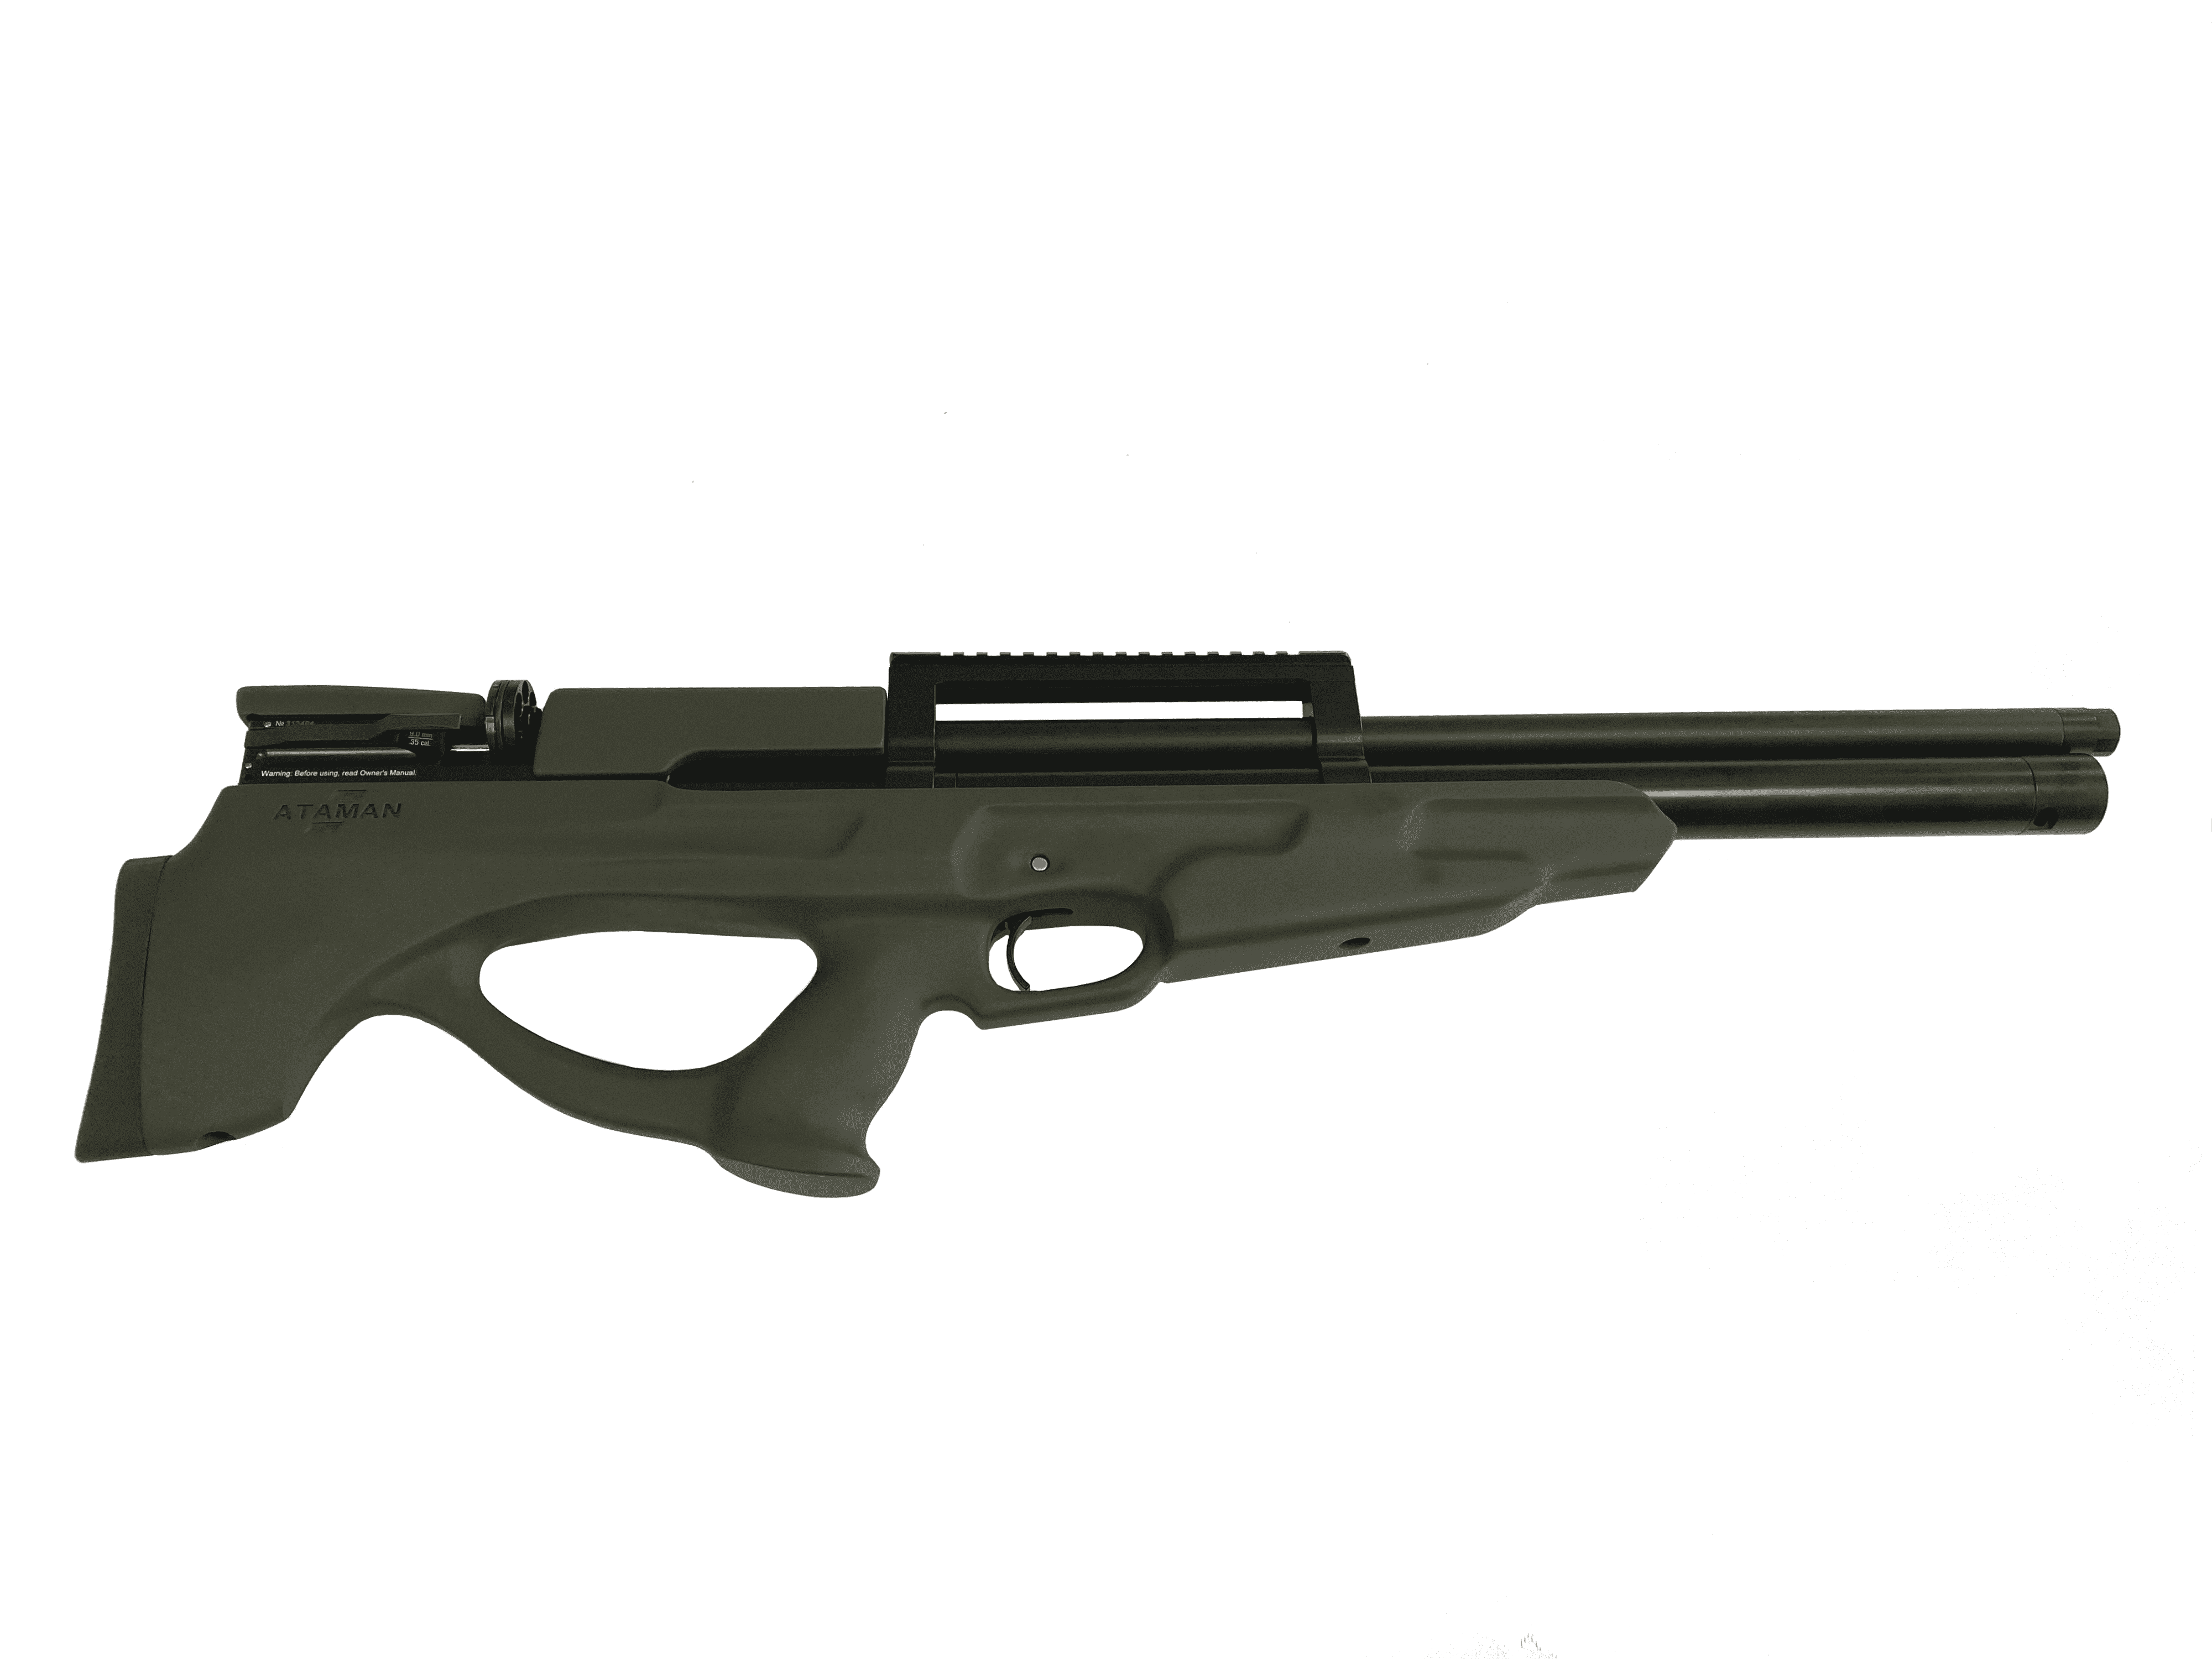 Пневматическая PCP винтовка ATAMAN M2R Булл-пап Тип 2, кал.6,35мм (Soft-Touch Black)